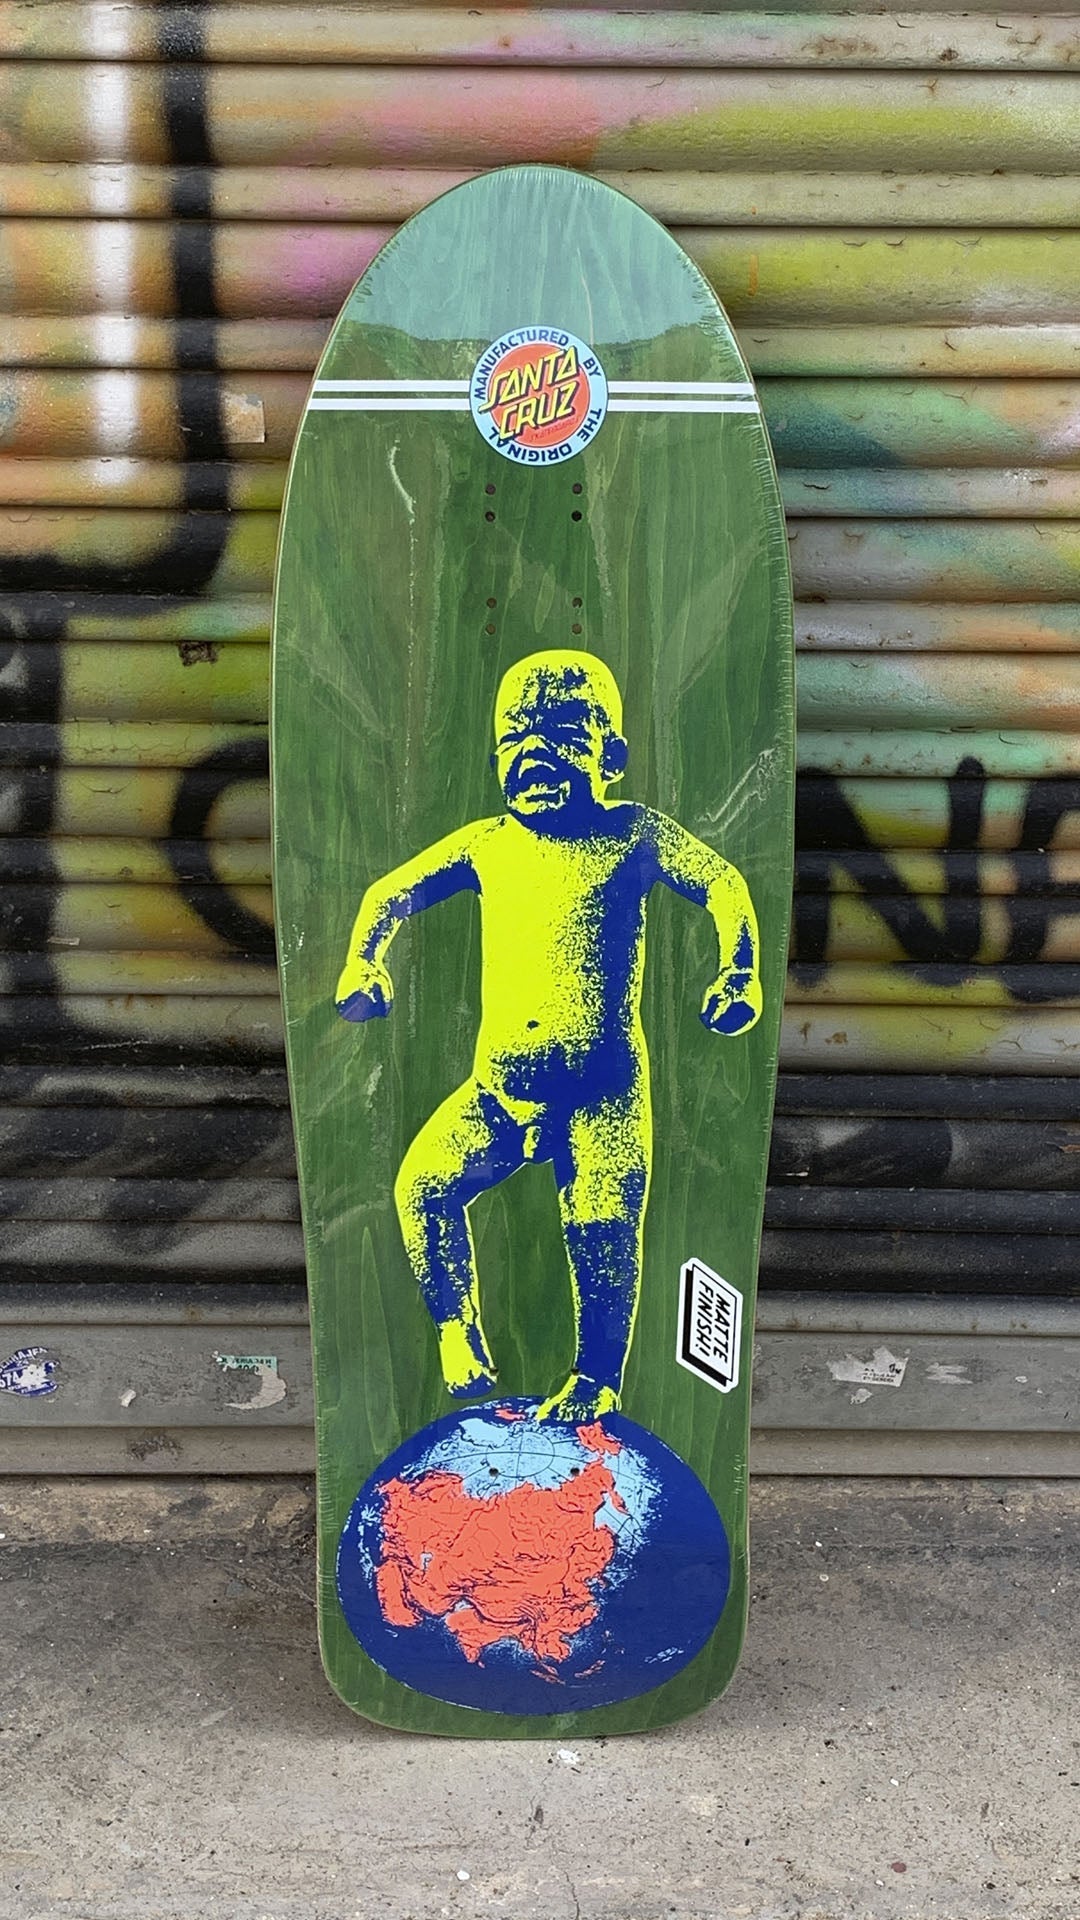 Santa Cruz Salba Baby Stomper Reissue Deck Prebook - Reserva Tabla de Skate Tabla/Deck Santa Cruz Skateboards 